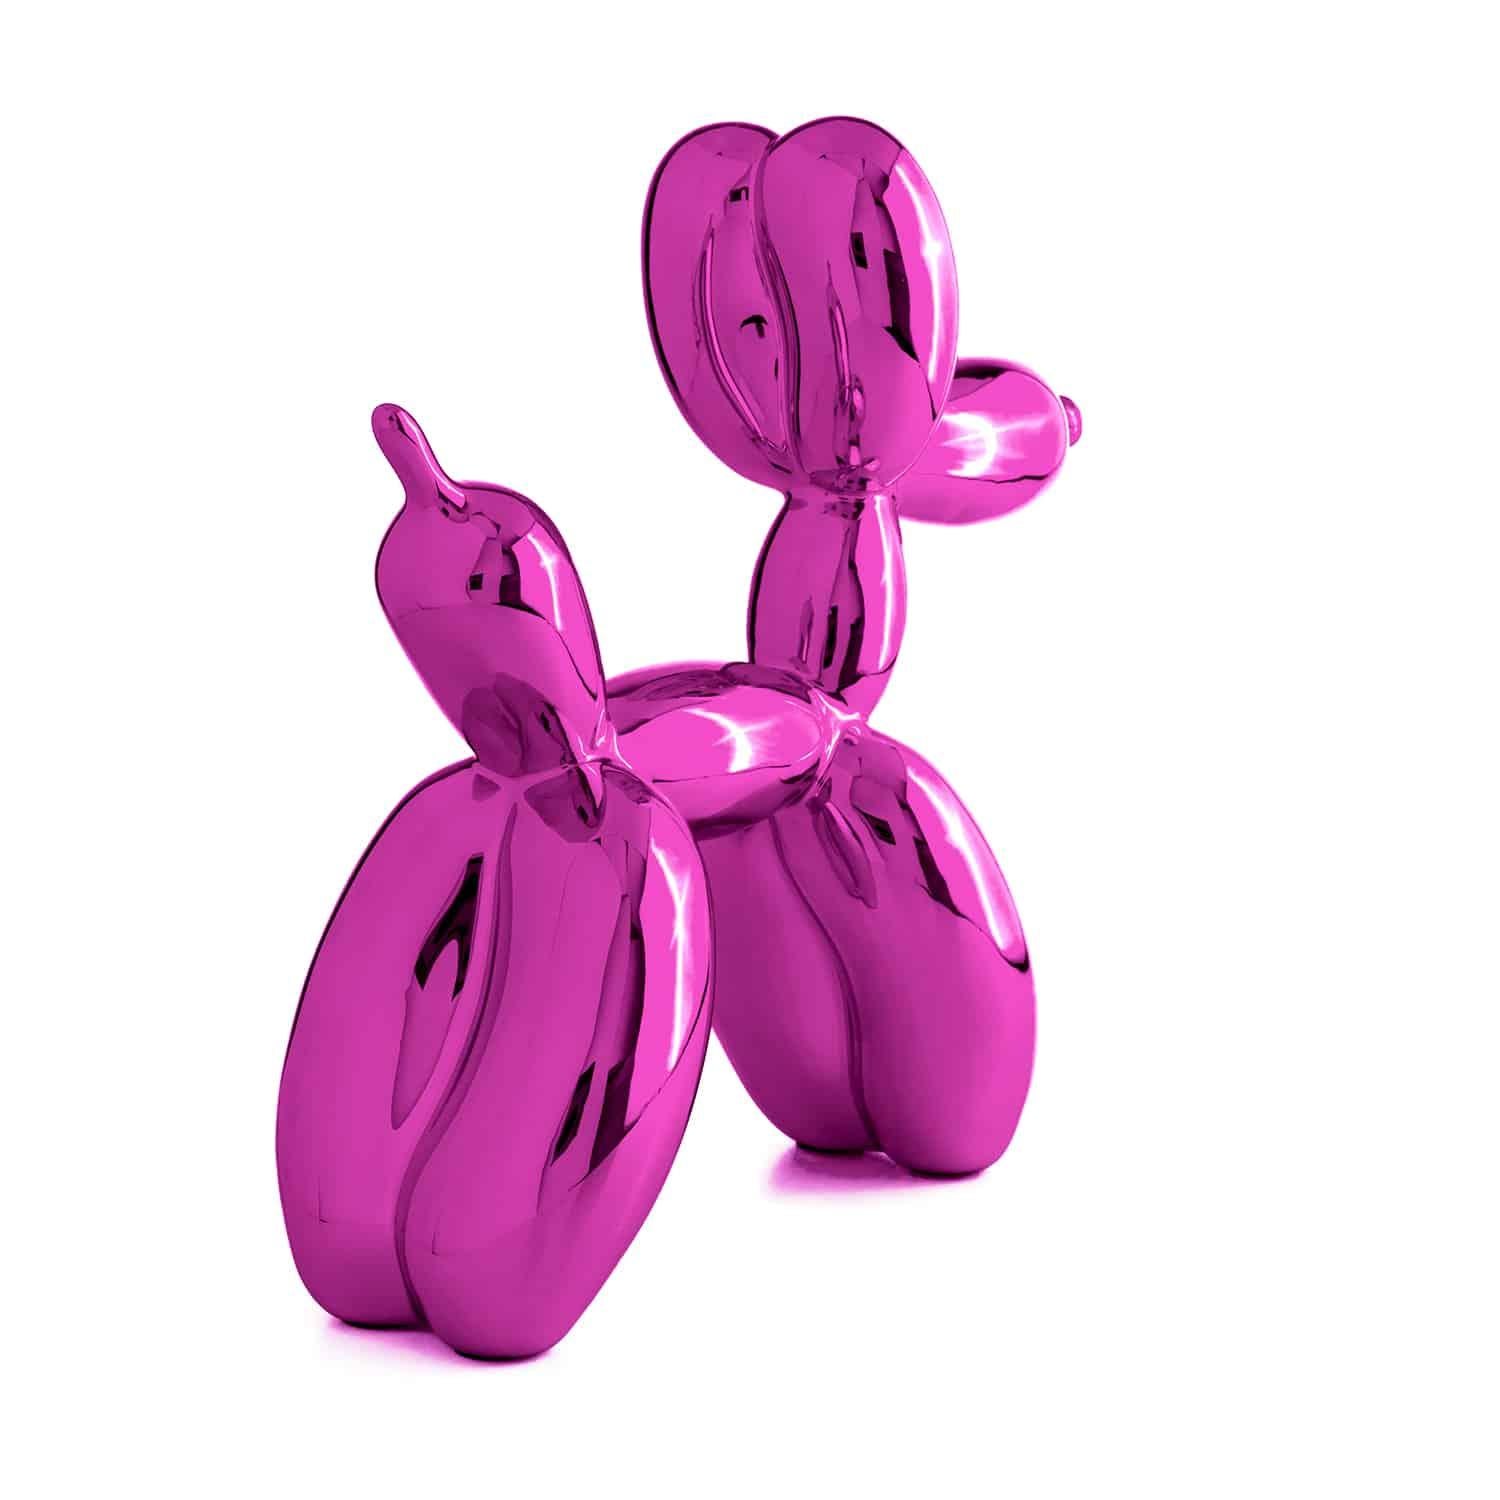 Balloon Dog (After) - Pink - Pop Art Sculpture by After Jeff Koons